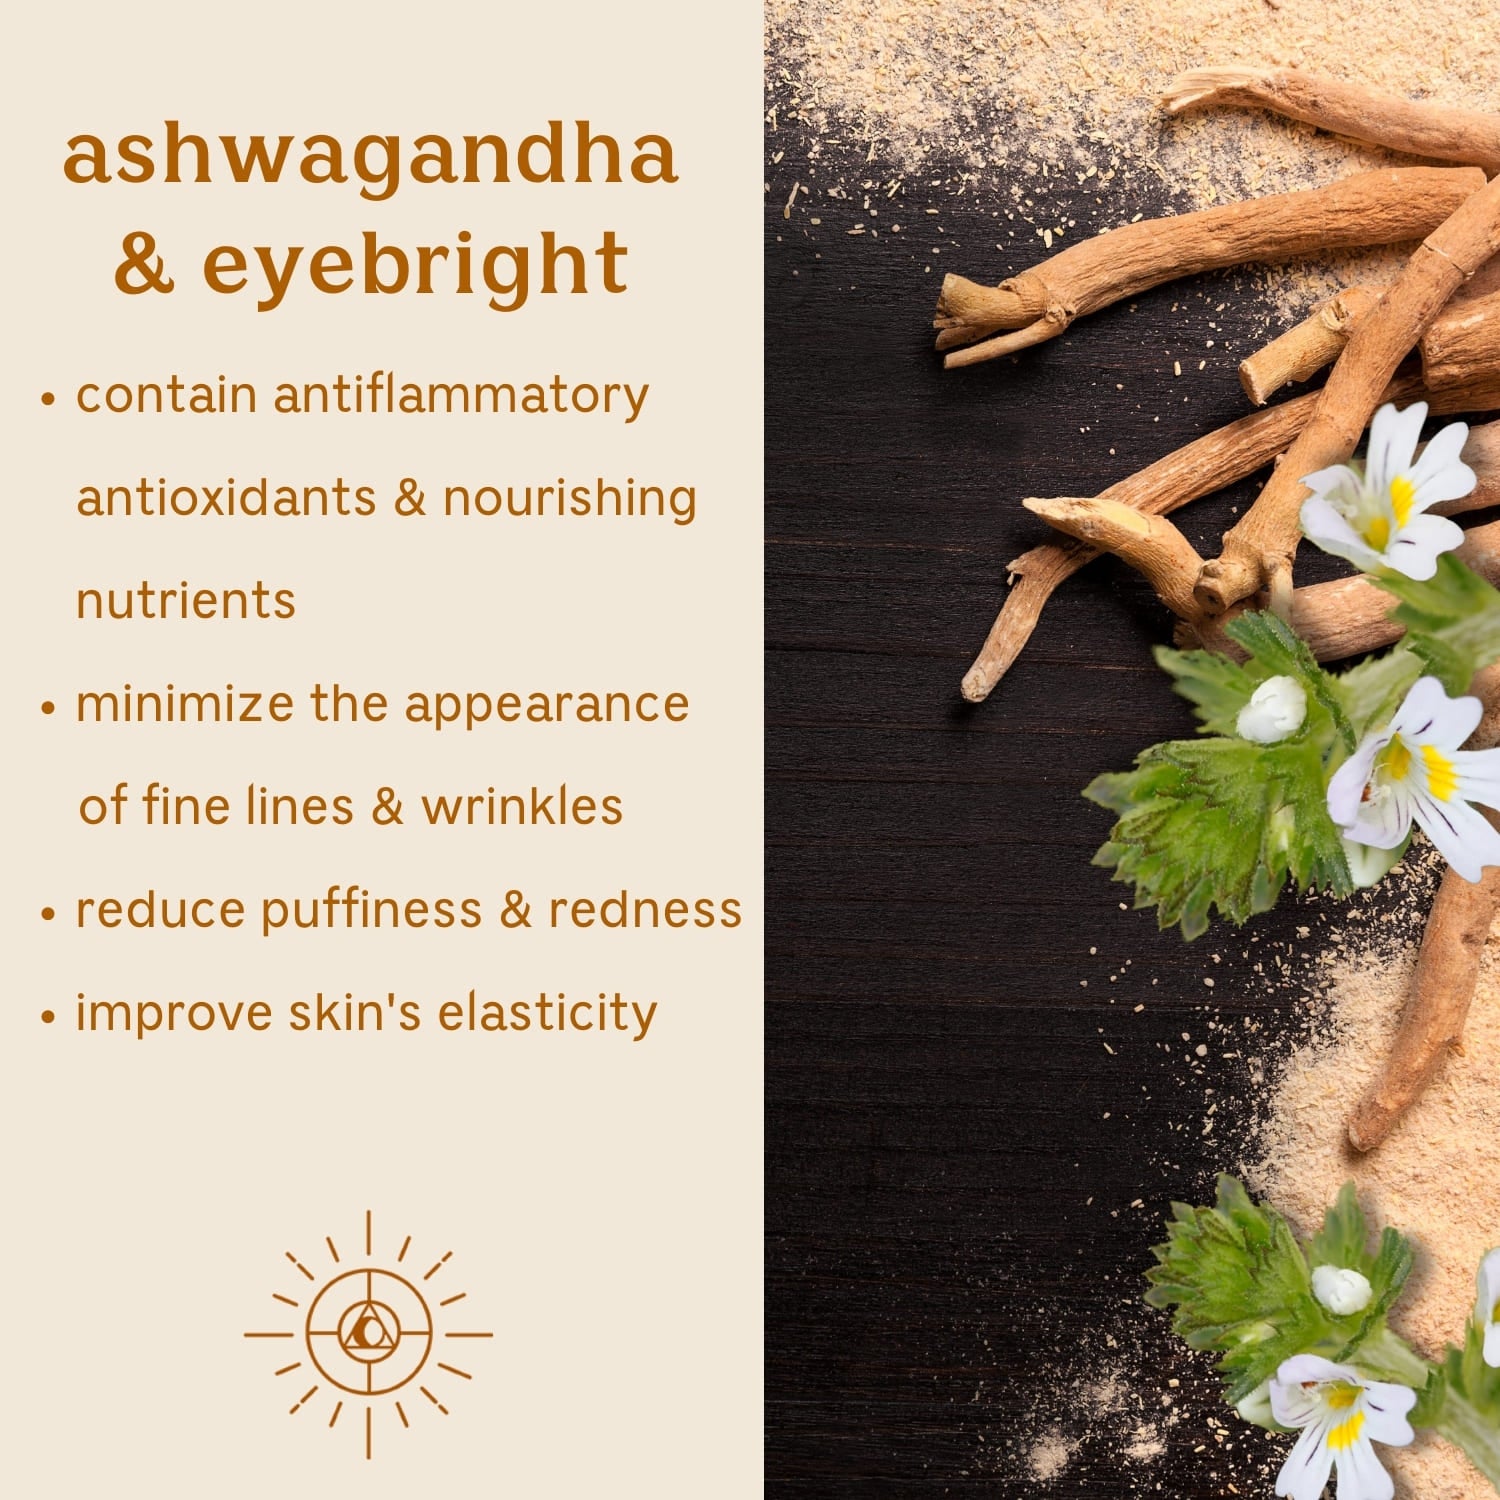 Solluna's Feel Good Eye Cream key ingredient benefit description. Ashwagandha & Eyebright: Contain antiflammatory antioxidants & nourishing nutrients, Minimize the appearance of fine lines & wrinkles, Reduce puffiness & redness, Improve skin's elasticity